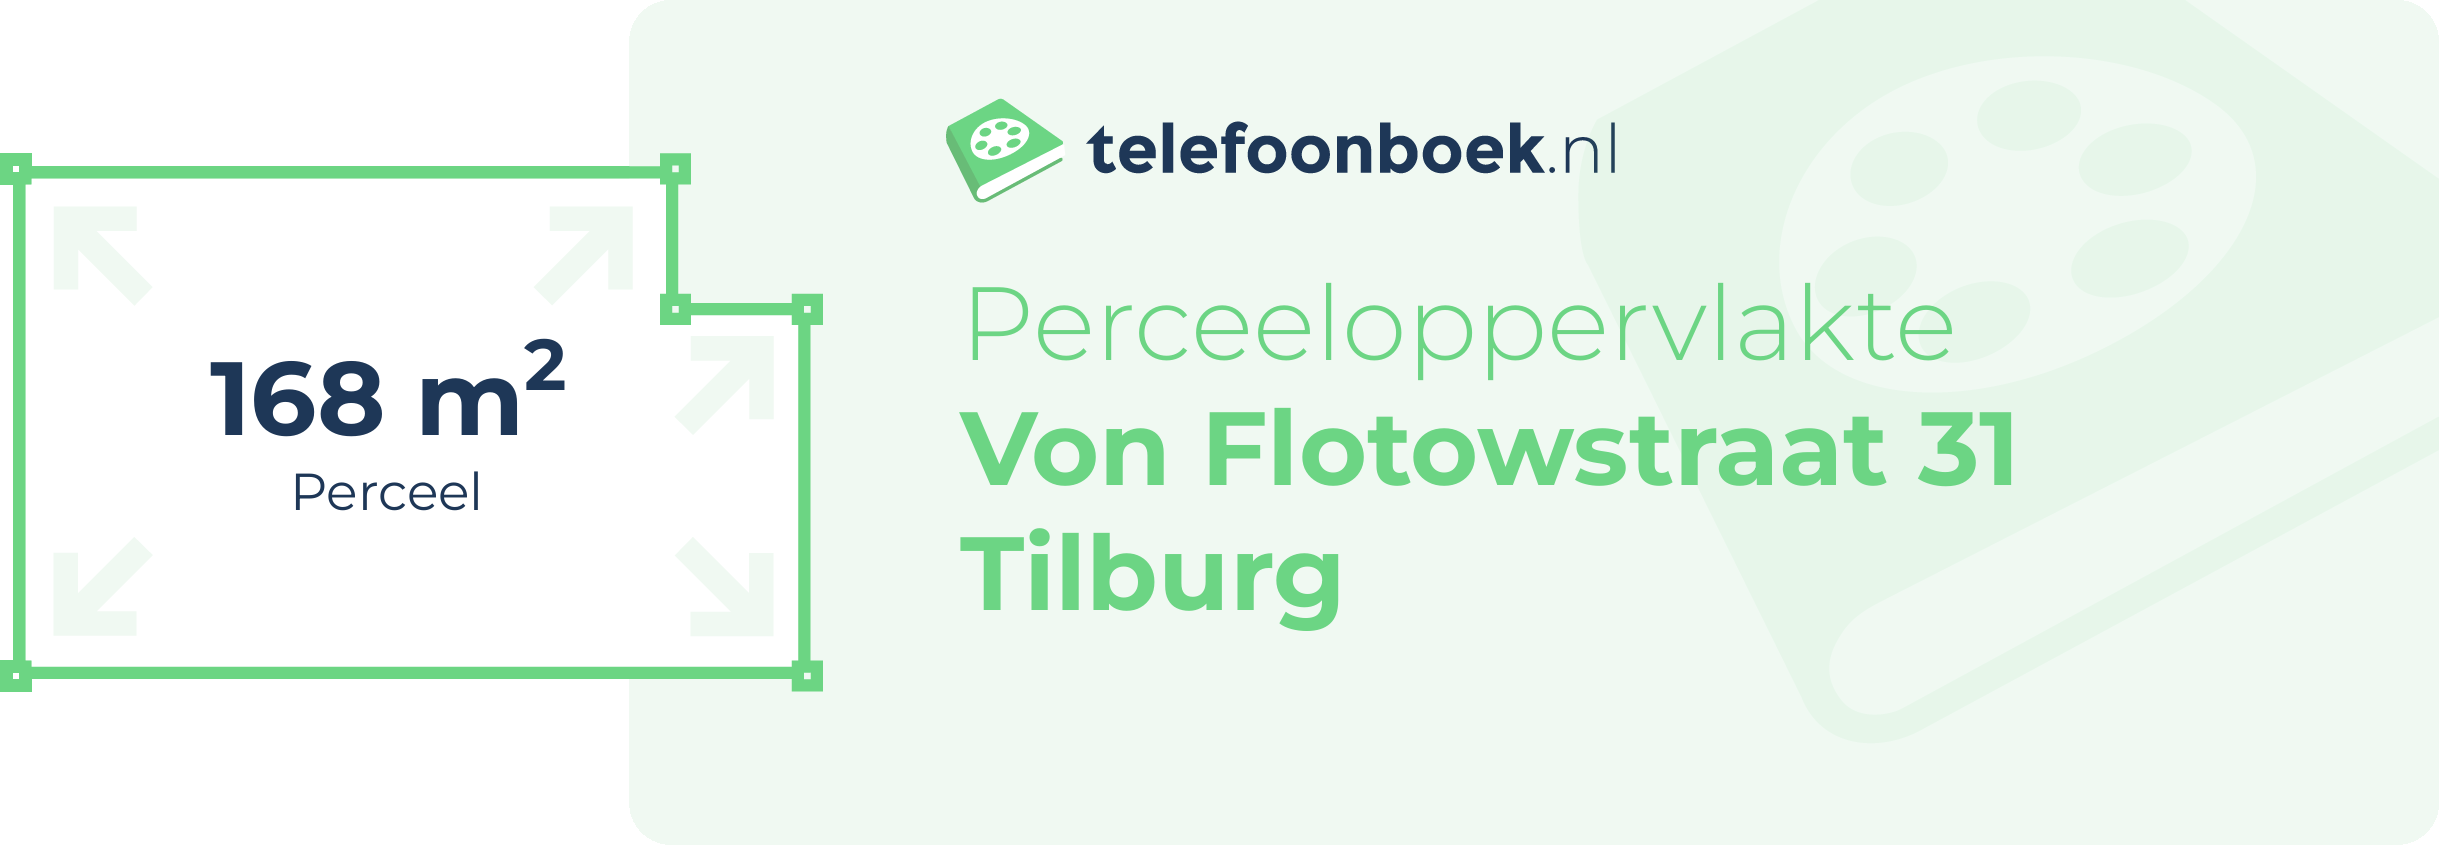 Perceeloppervlakte Von Flotowstraat 31 Tilburg